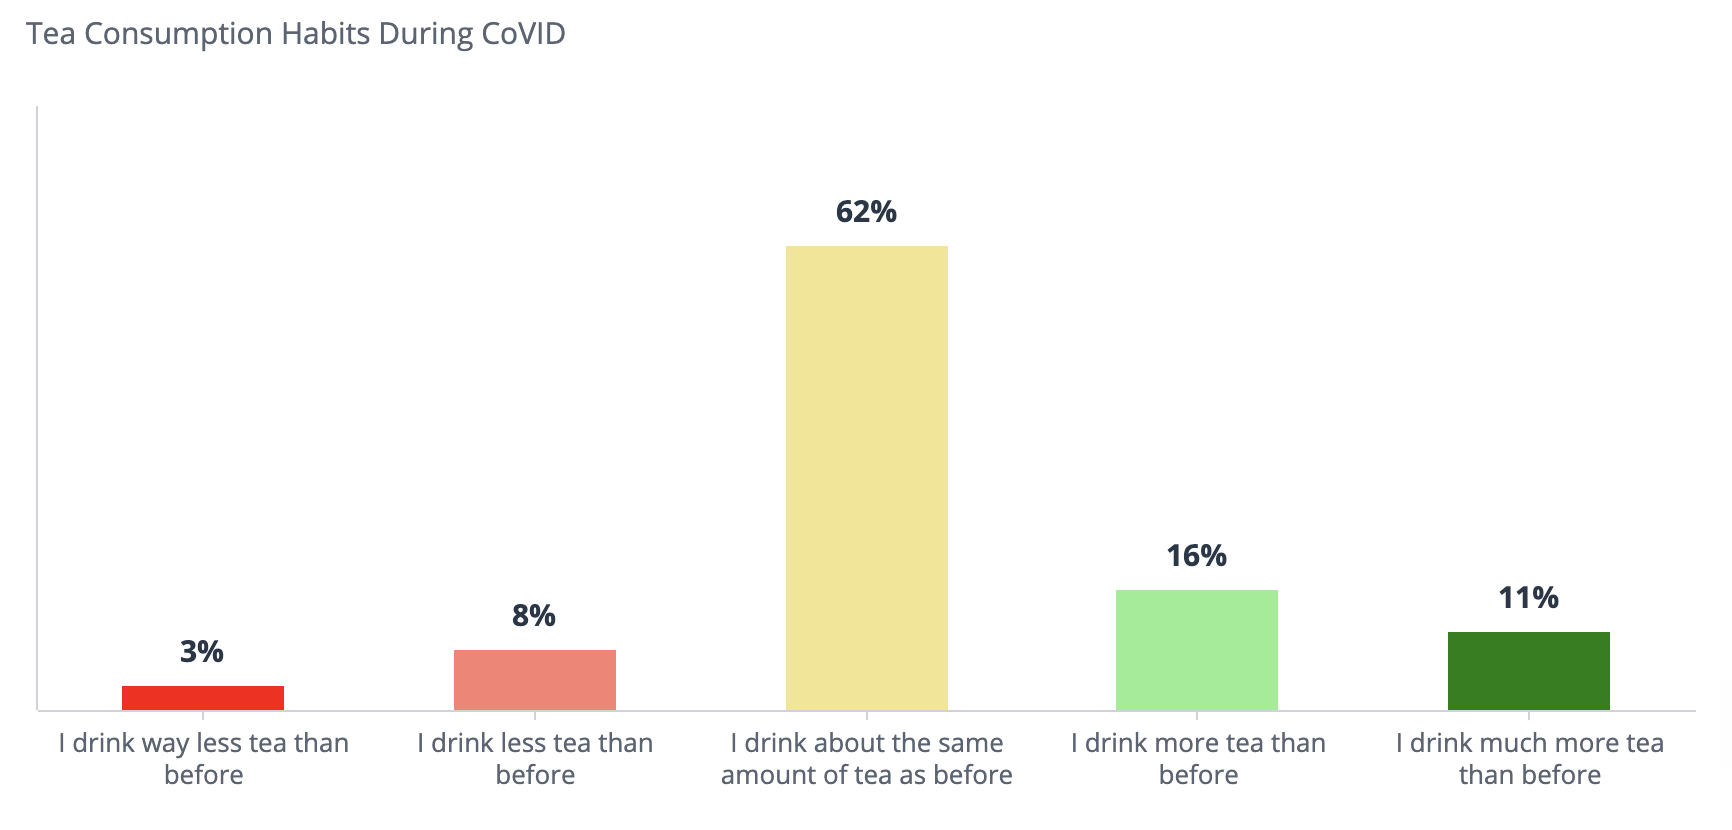 tea consumption habits during COVID